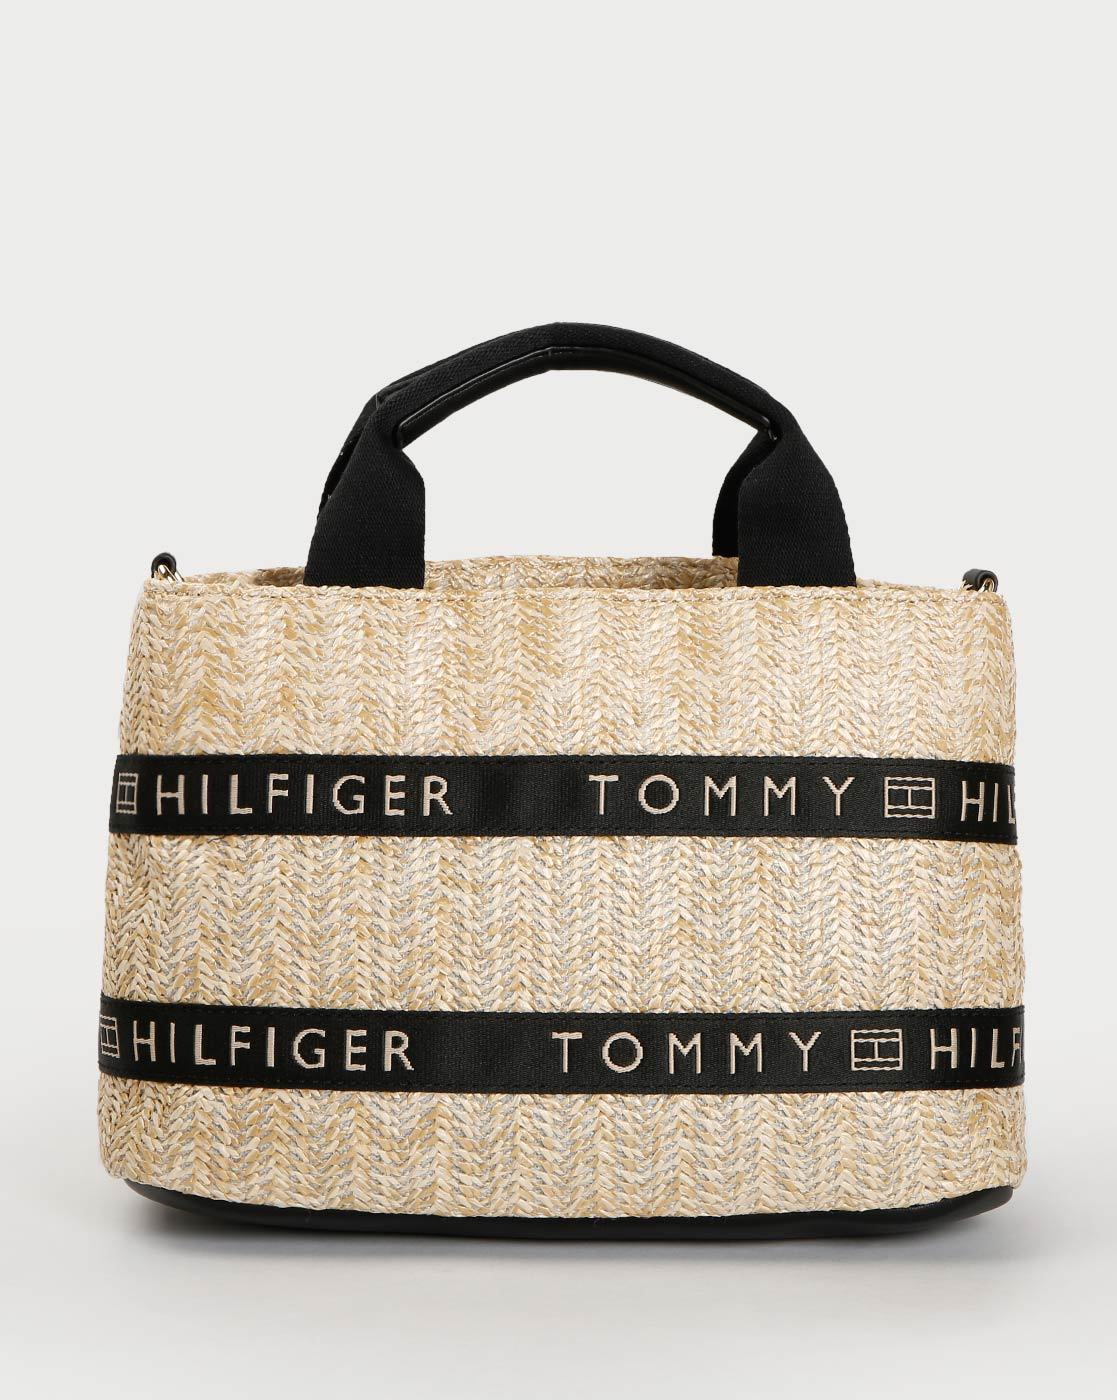 tommy hilfiger handbags online india